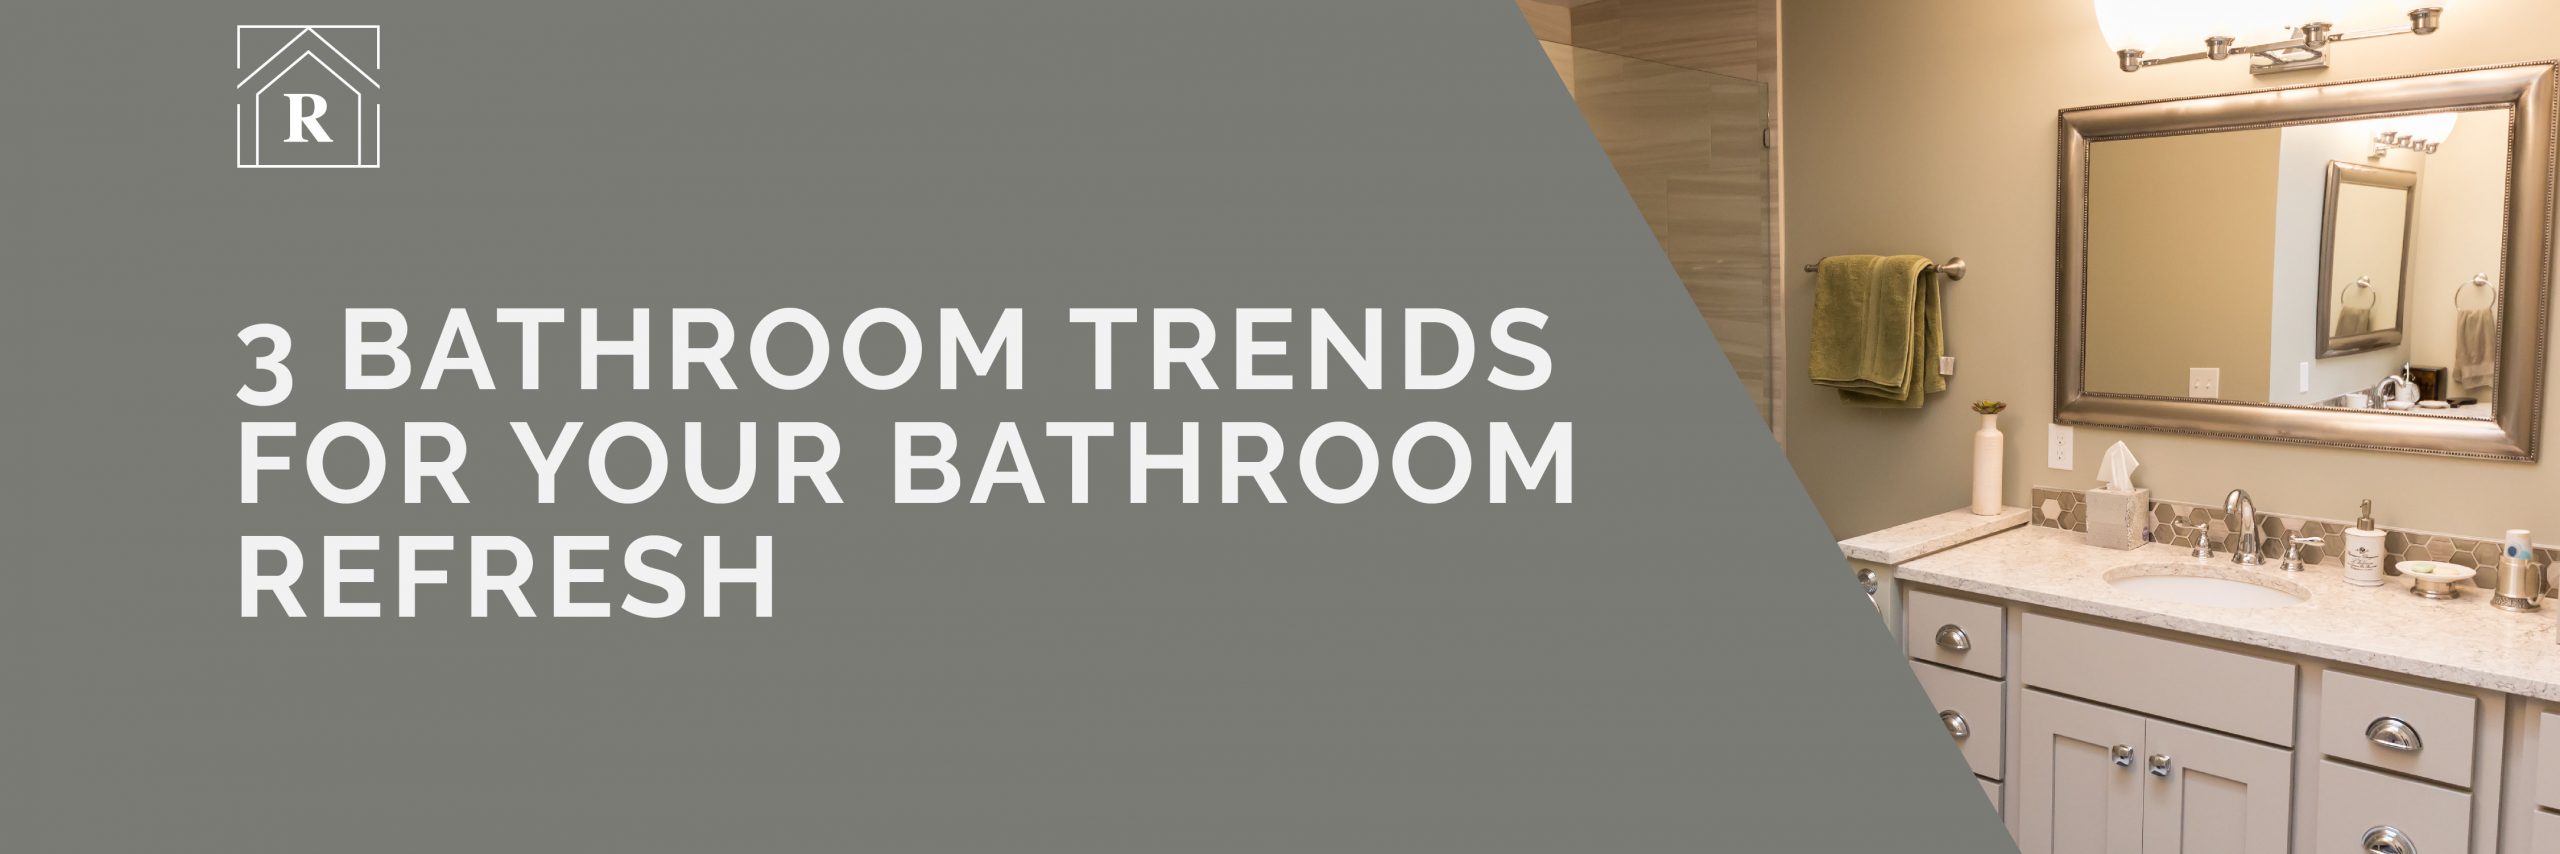 3 Bathroom Trends for Your Bathroom Refresh Blog Post